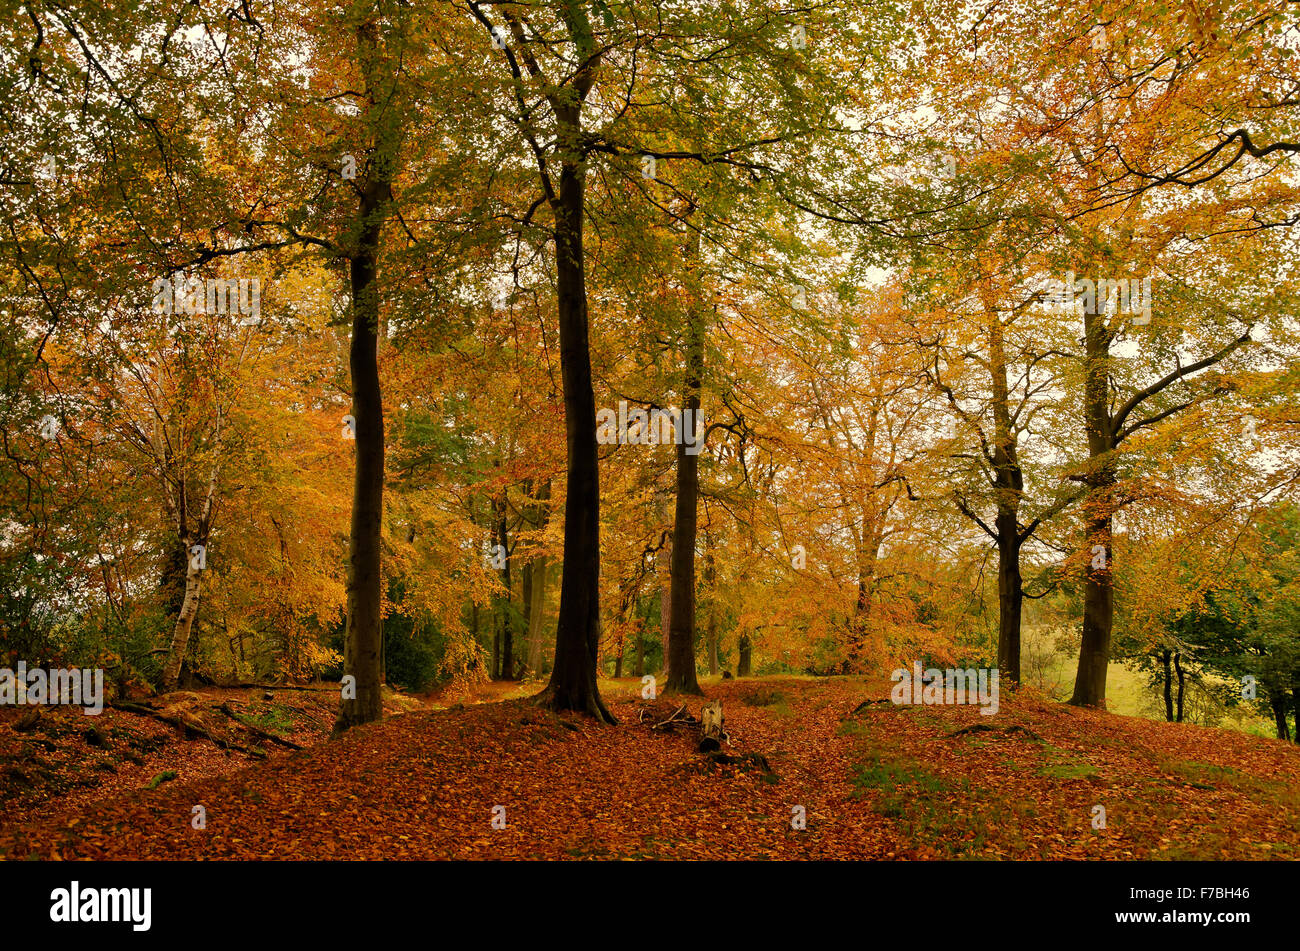 Autumn in woods at Artists Lane, Alderley Edge, Cheshire, England. Stock Photo